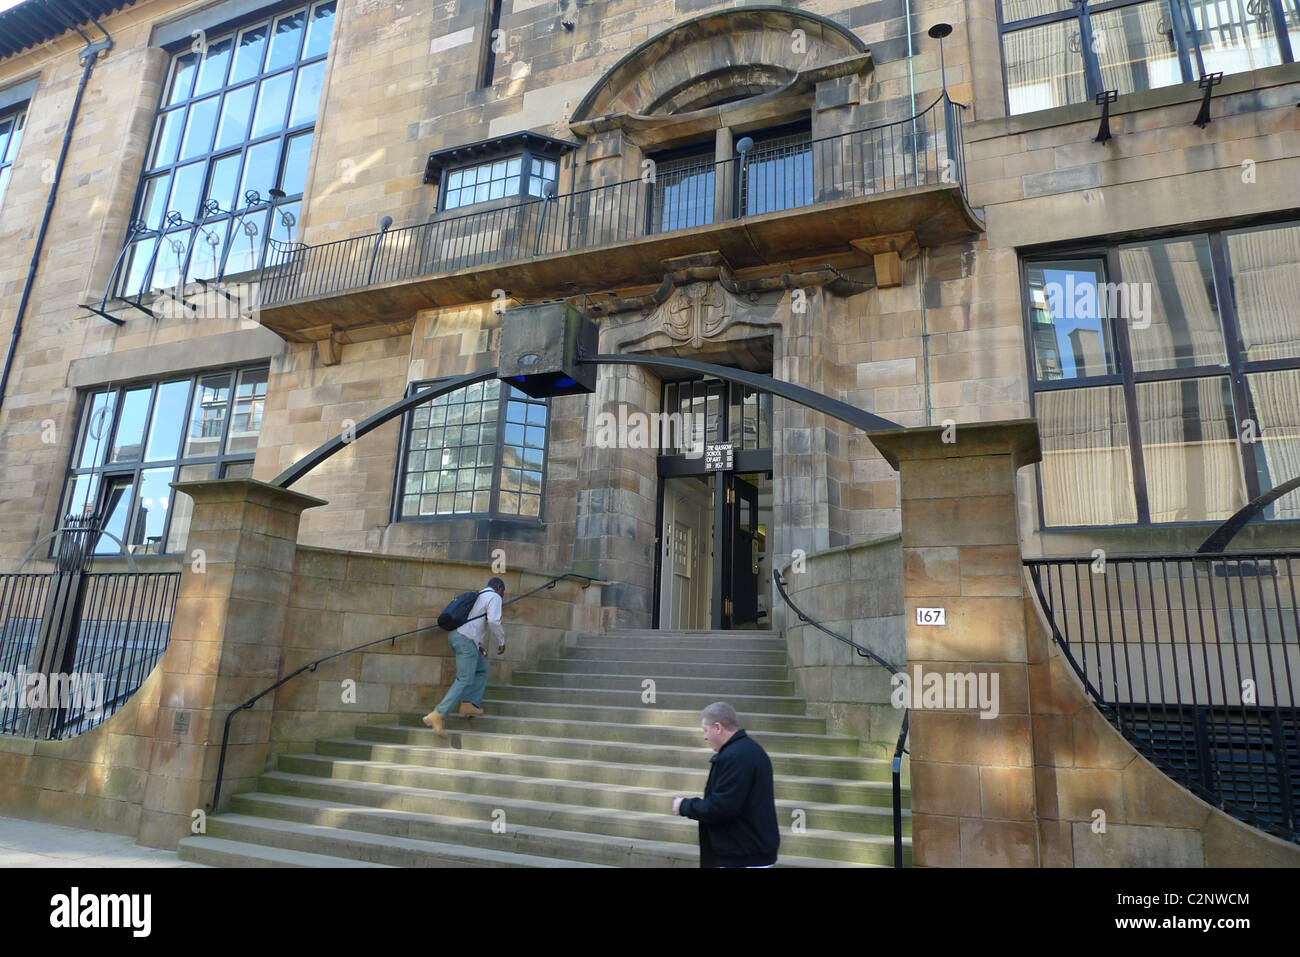 The Charles Rennie MackIntosh designed Glasgow School of Art, in Glasgow, Scotland. Stock Photo